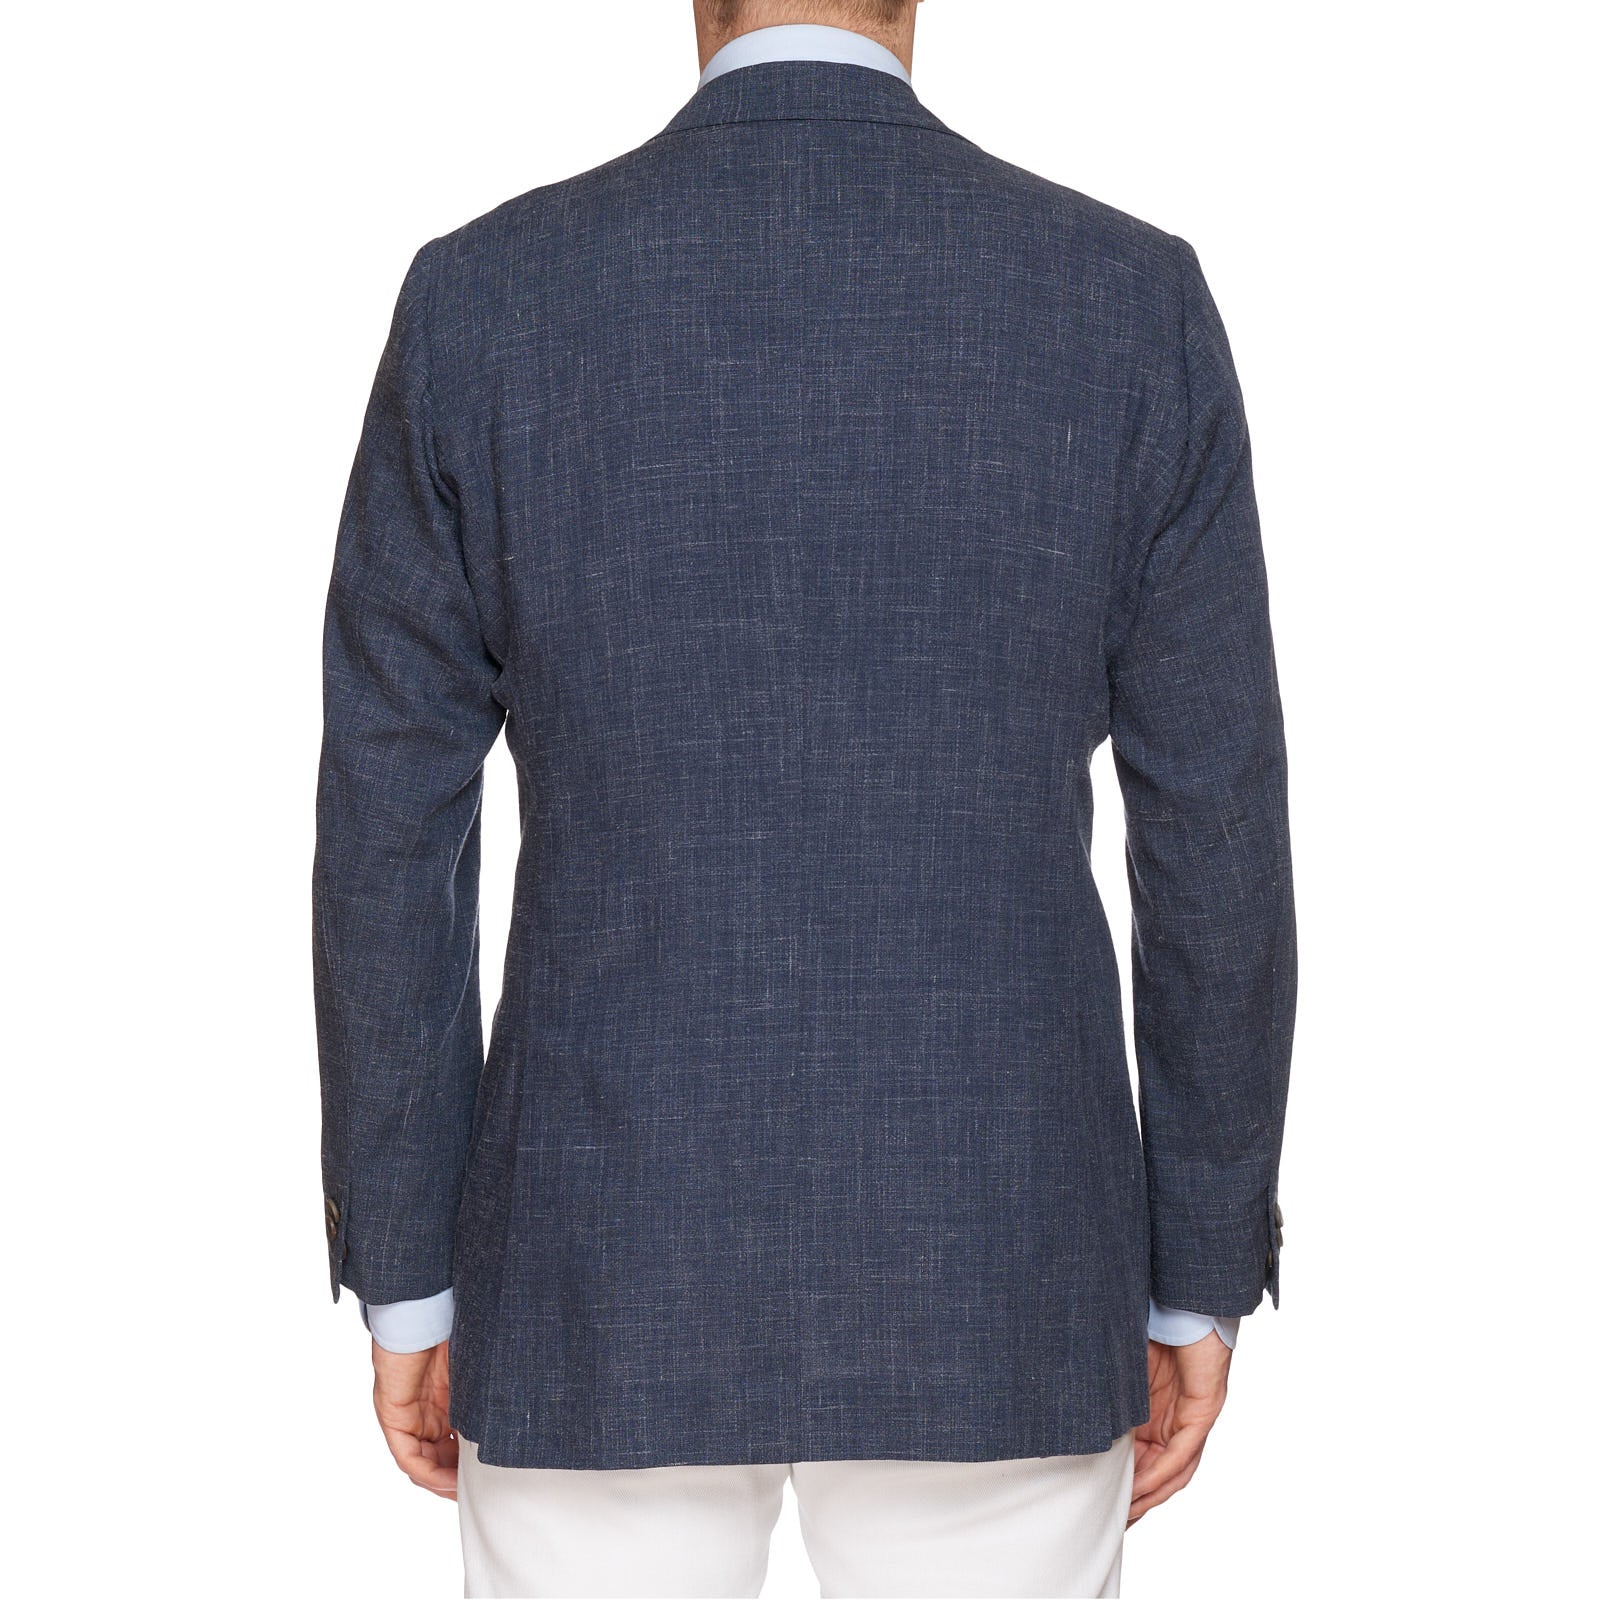 RUBINACCI LH Handmade Bespoke Chambray Blue Wool-Silk-Linen Jacket EU 50 NEW US 40 RUBINACCI